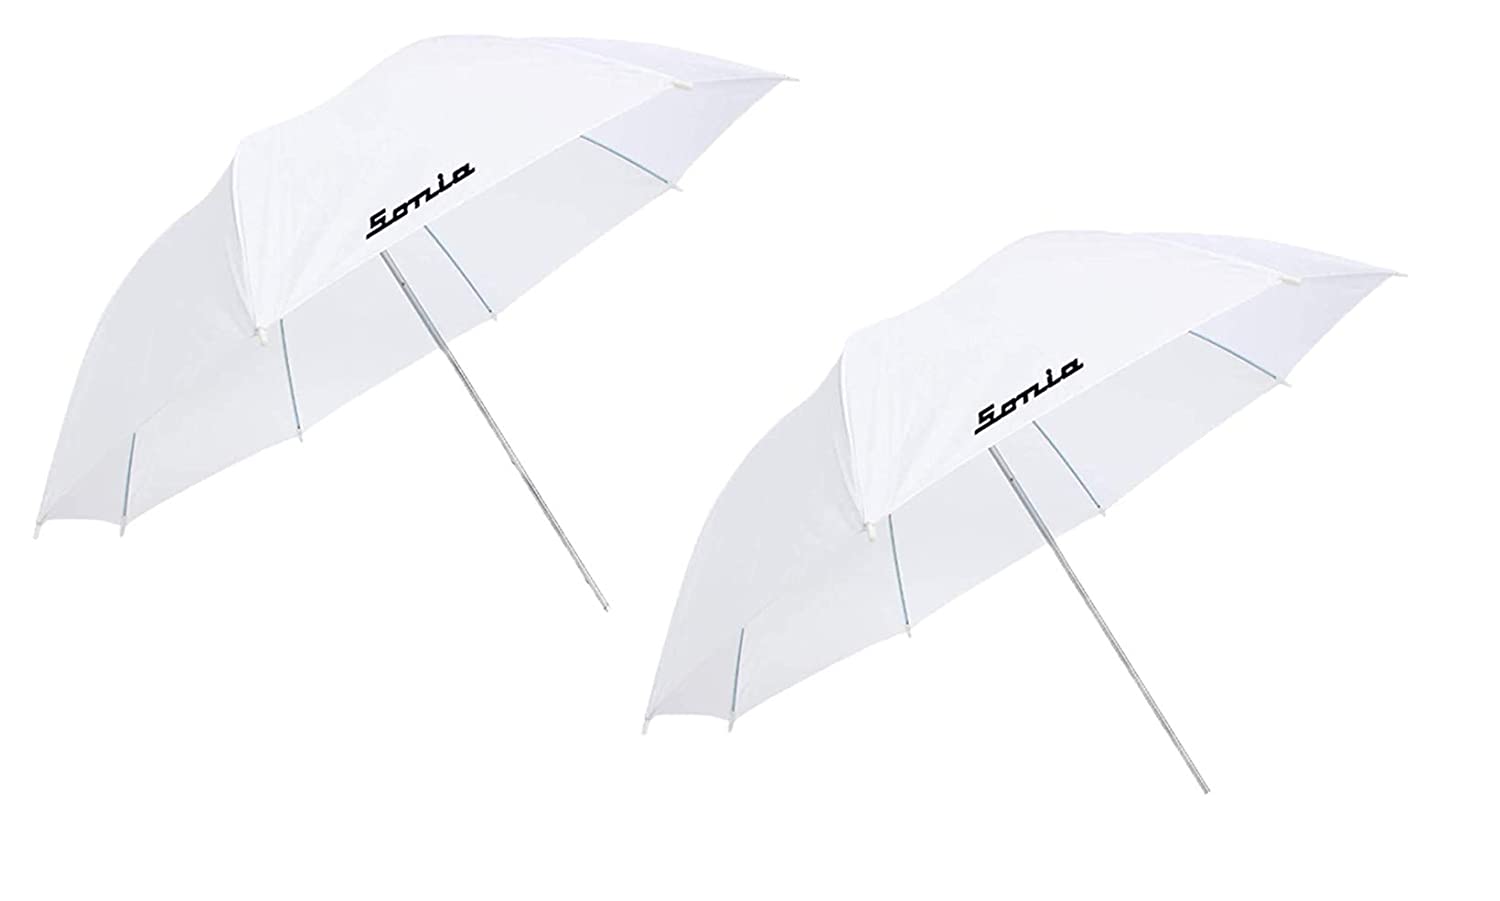 Sonia Professional White Umbrella 36 inch/91cm for Photography Studio LED Video Light (combo 2Pcs) - The Camerashop